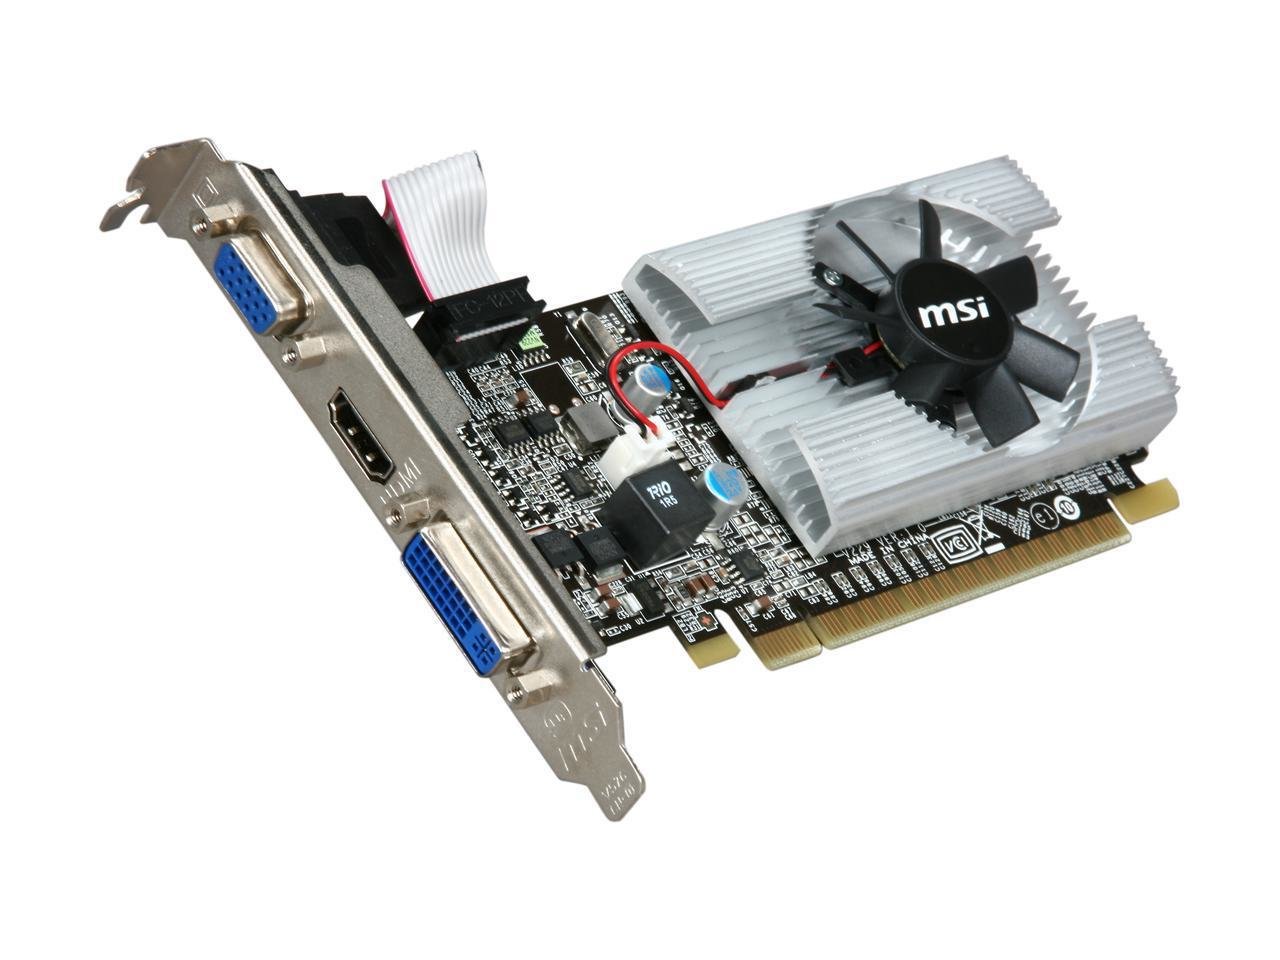 MSI GeForce 210 DirectX 10.1 N210-MD1G/D3 1GB 64-Bit